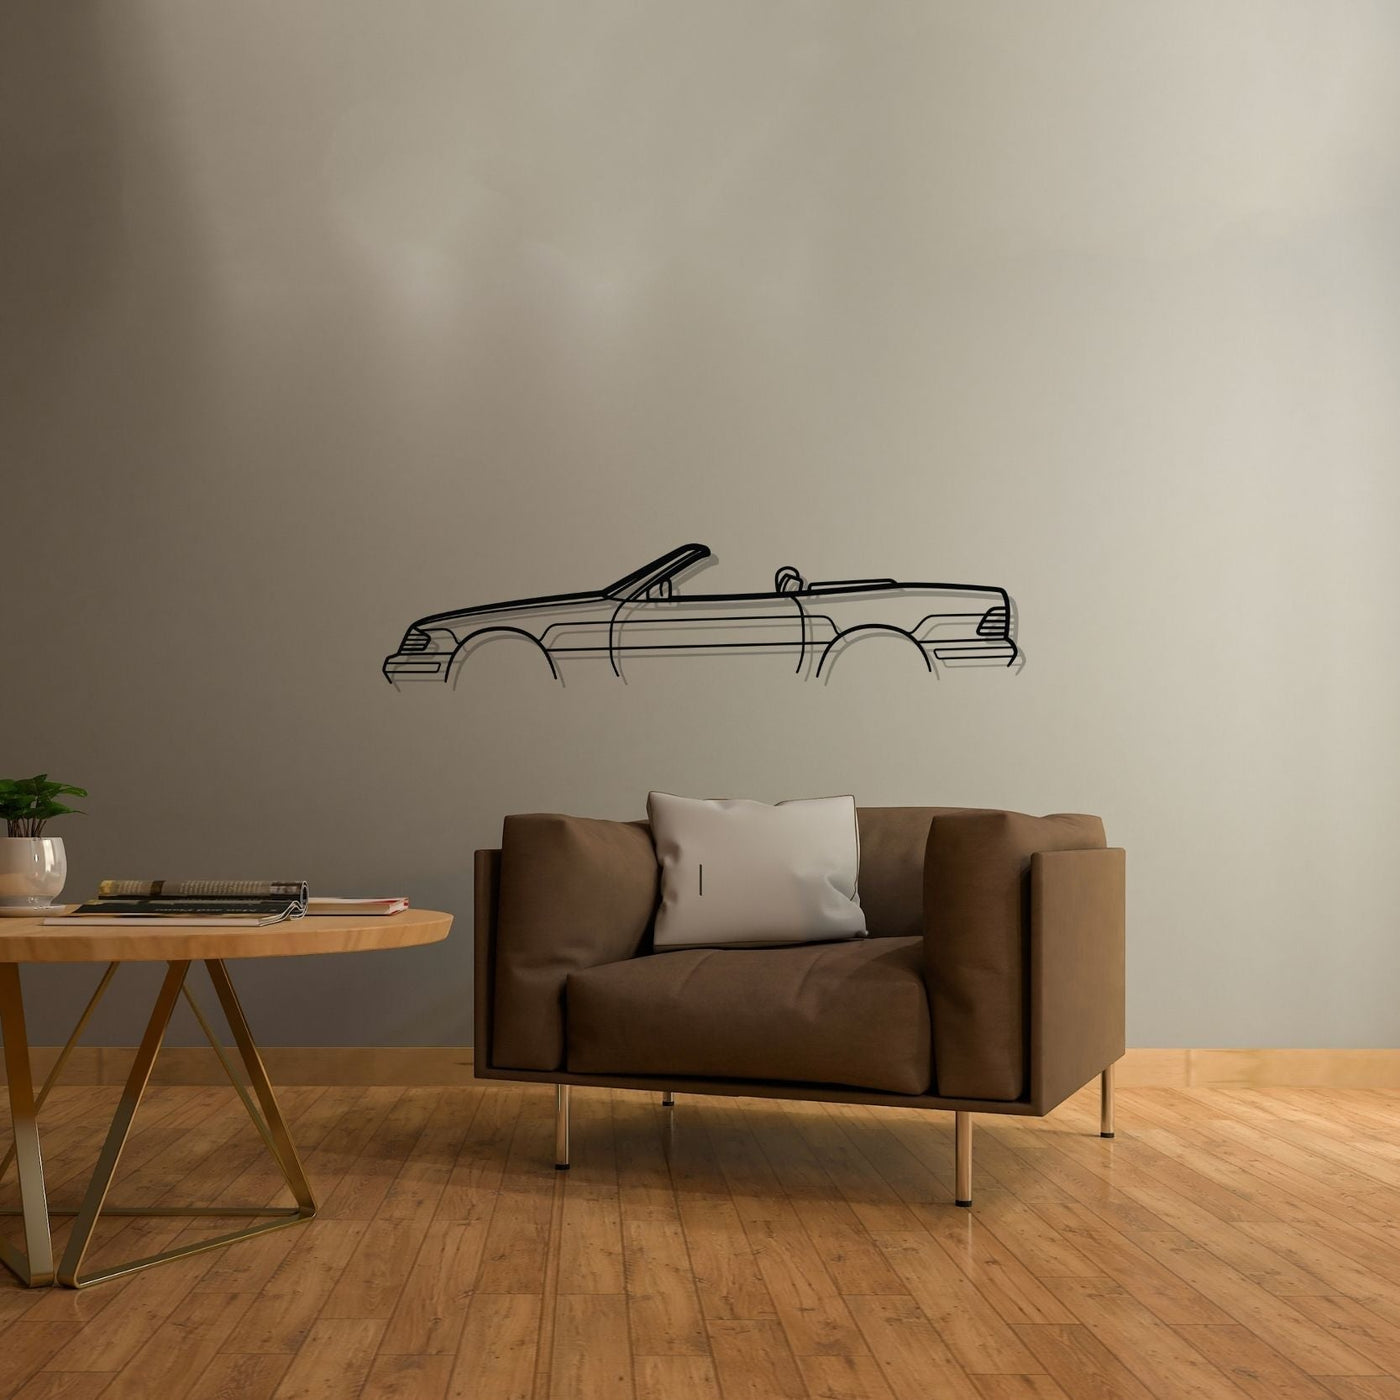 SL-Class R129 Classic Silhouette Metal Wall Art